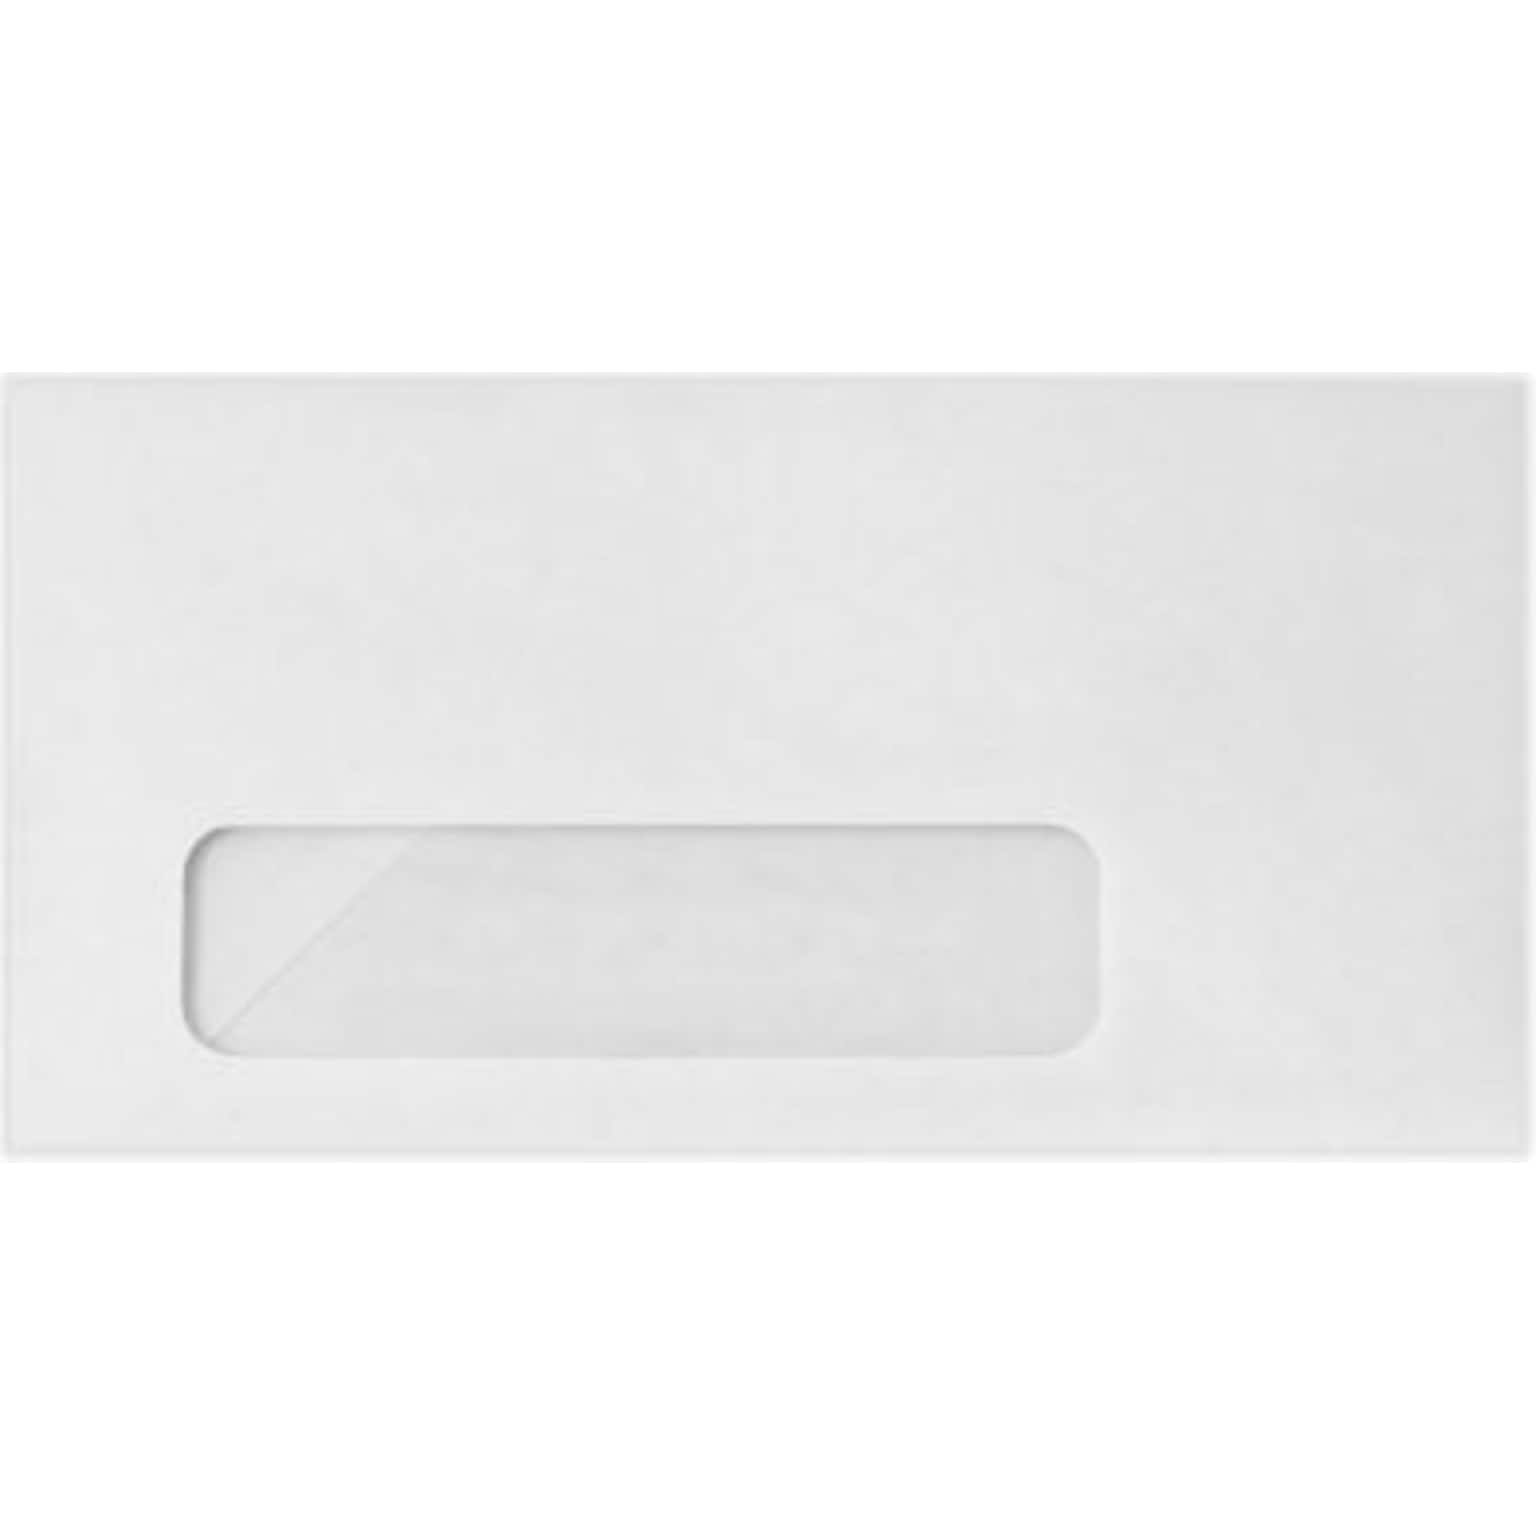 LUX #7 1/2 Window Envelope, 3 15/16 x 7 1/2, White, 250/Pack (WS-1624-250)